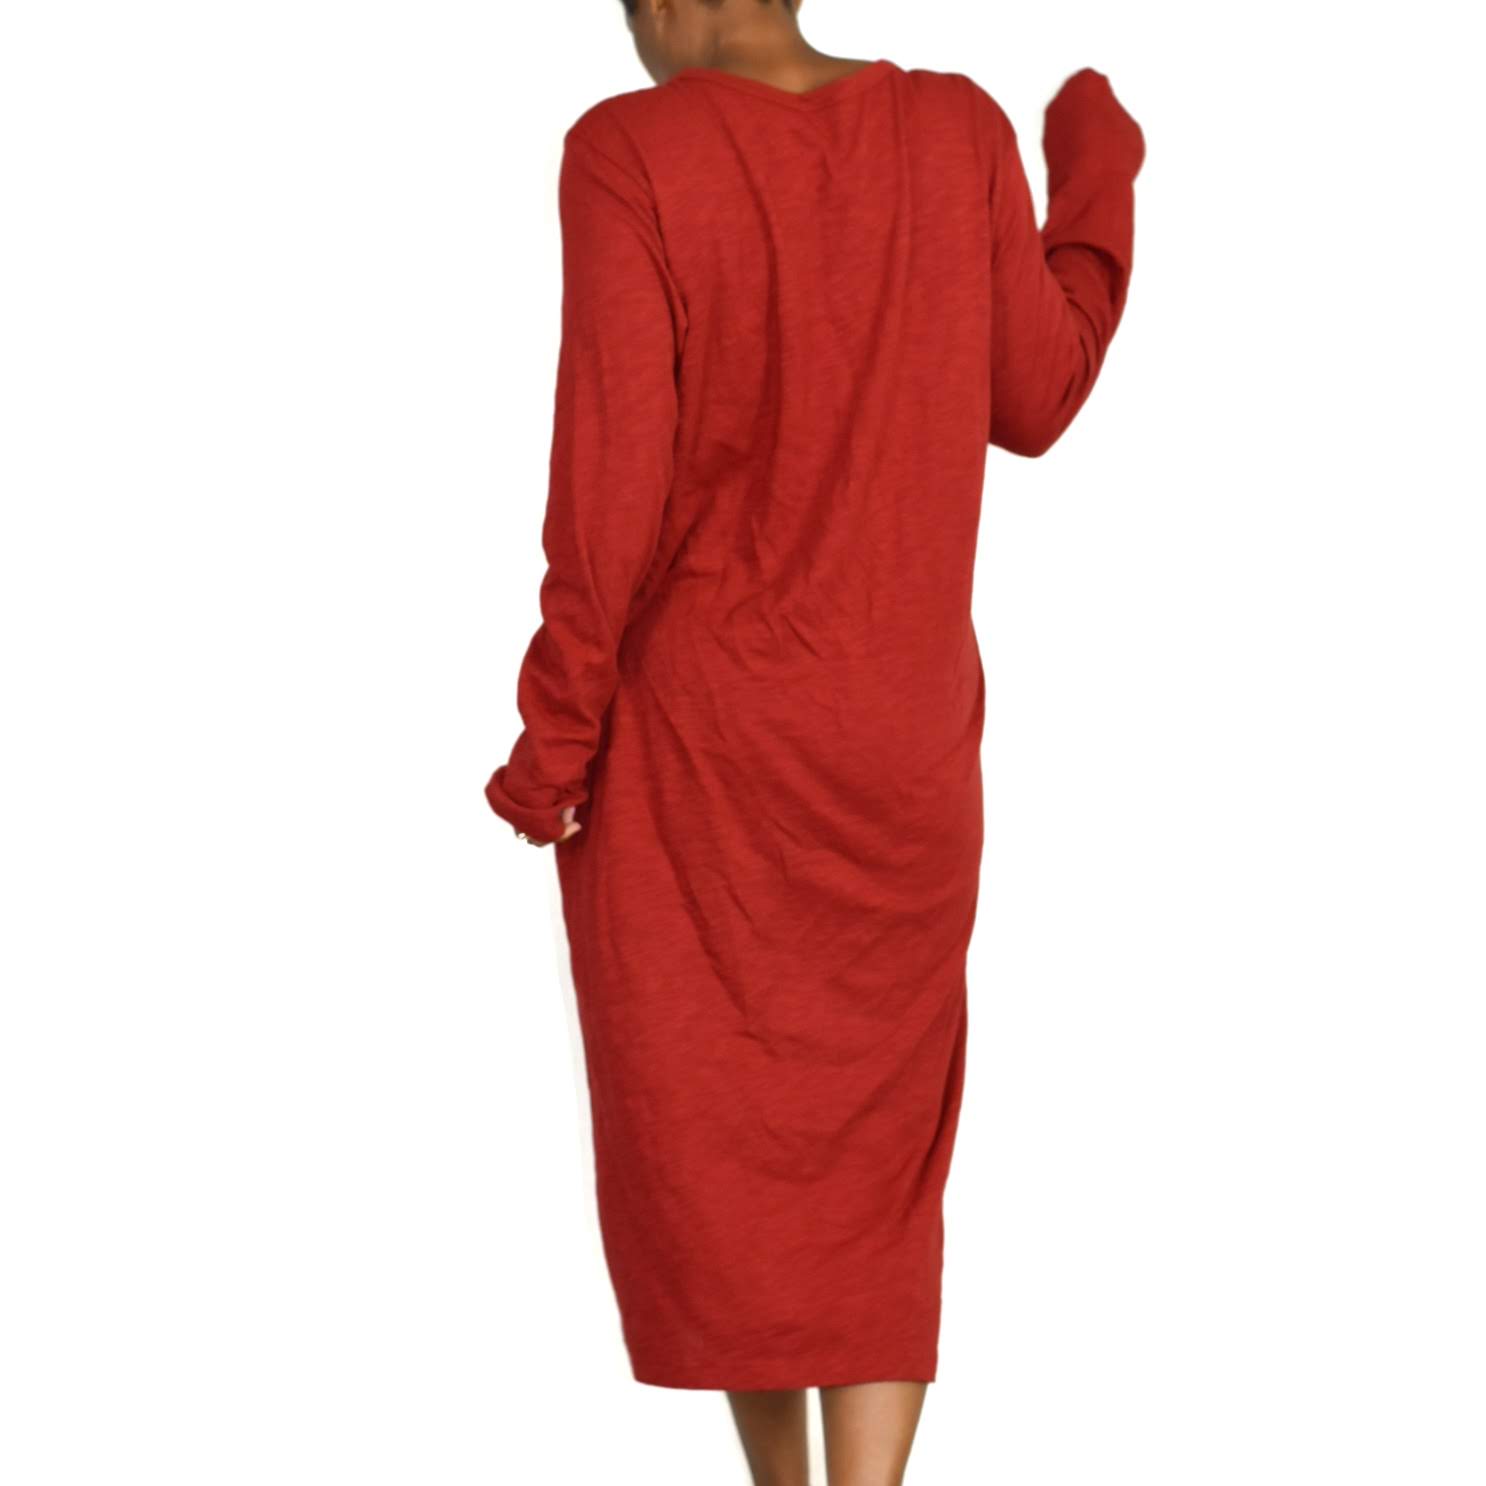 Wilt Long Sleeve Side Snap Dress Size Large